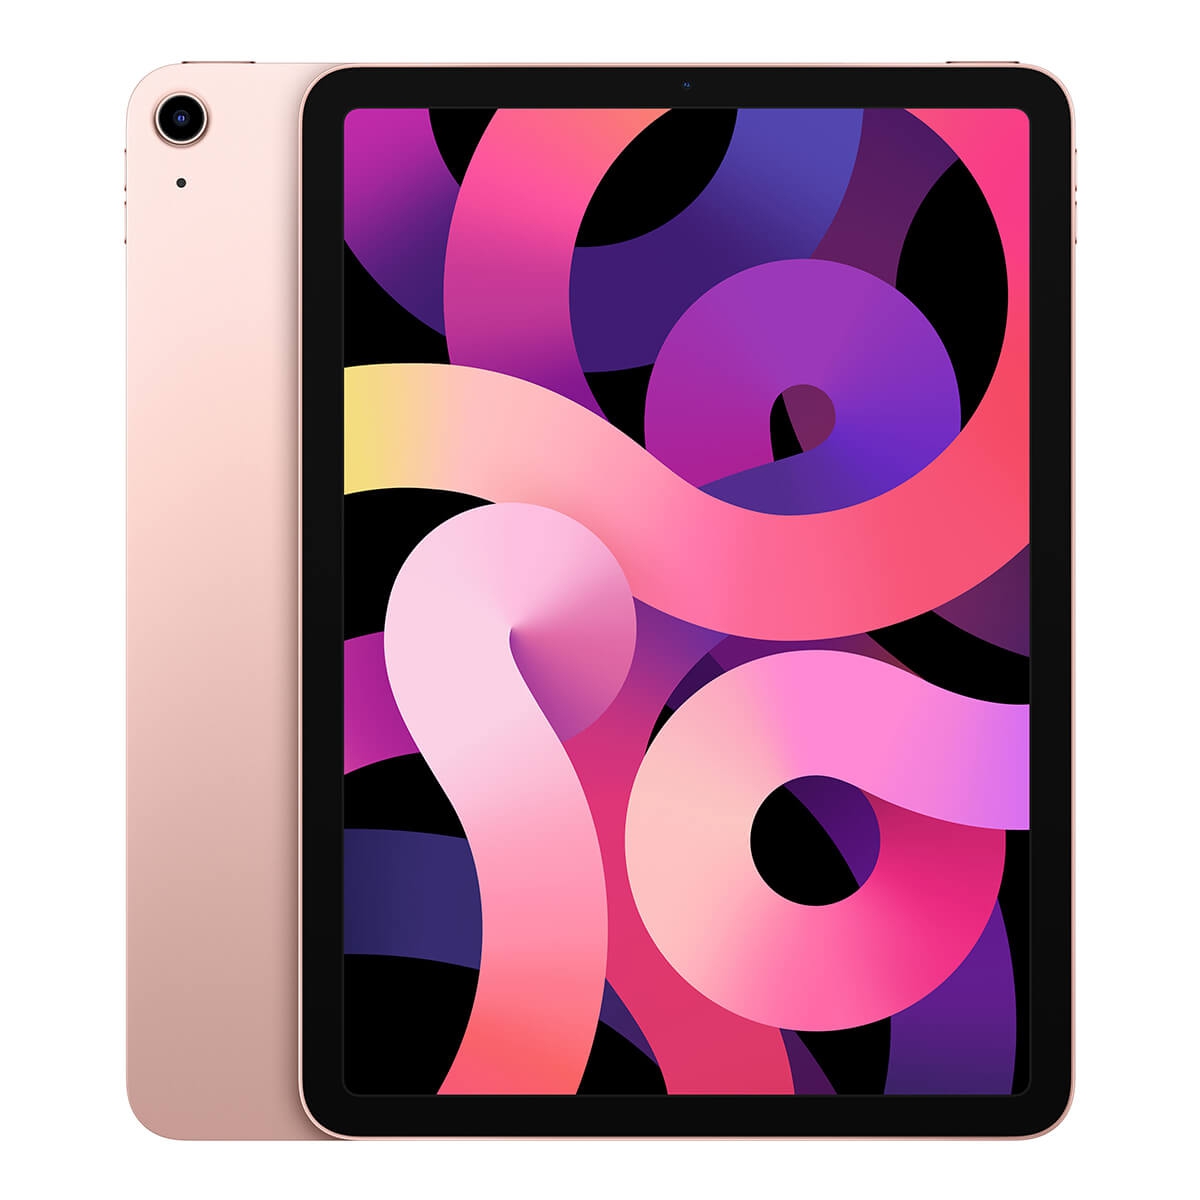 Apple iPad Air 4代Wi-Fi (256G)最低價格,規格,跑分,比較及評價|傑昇 